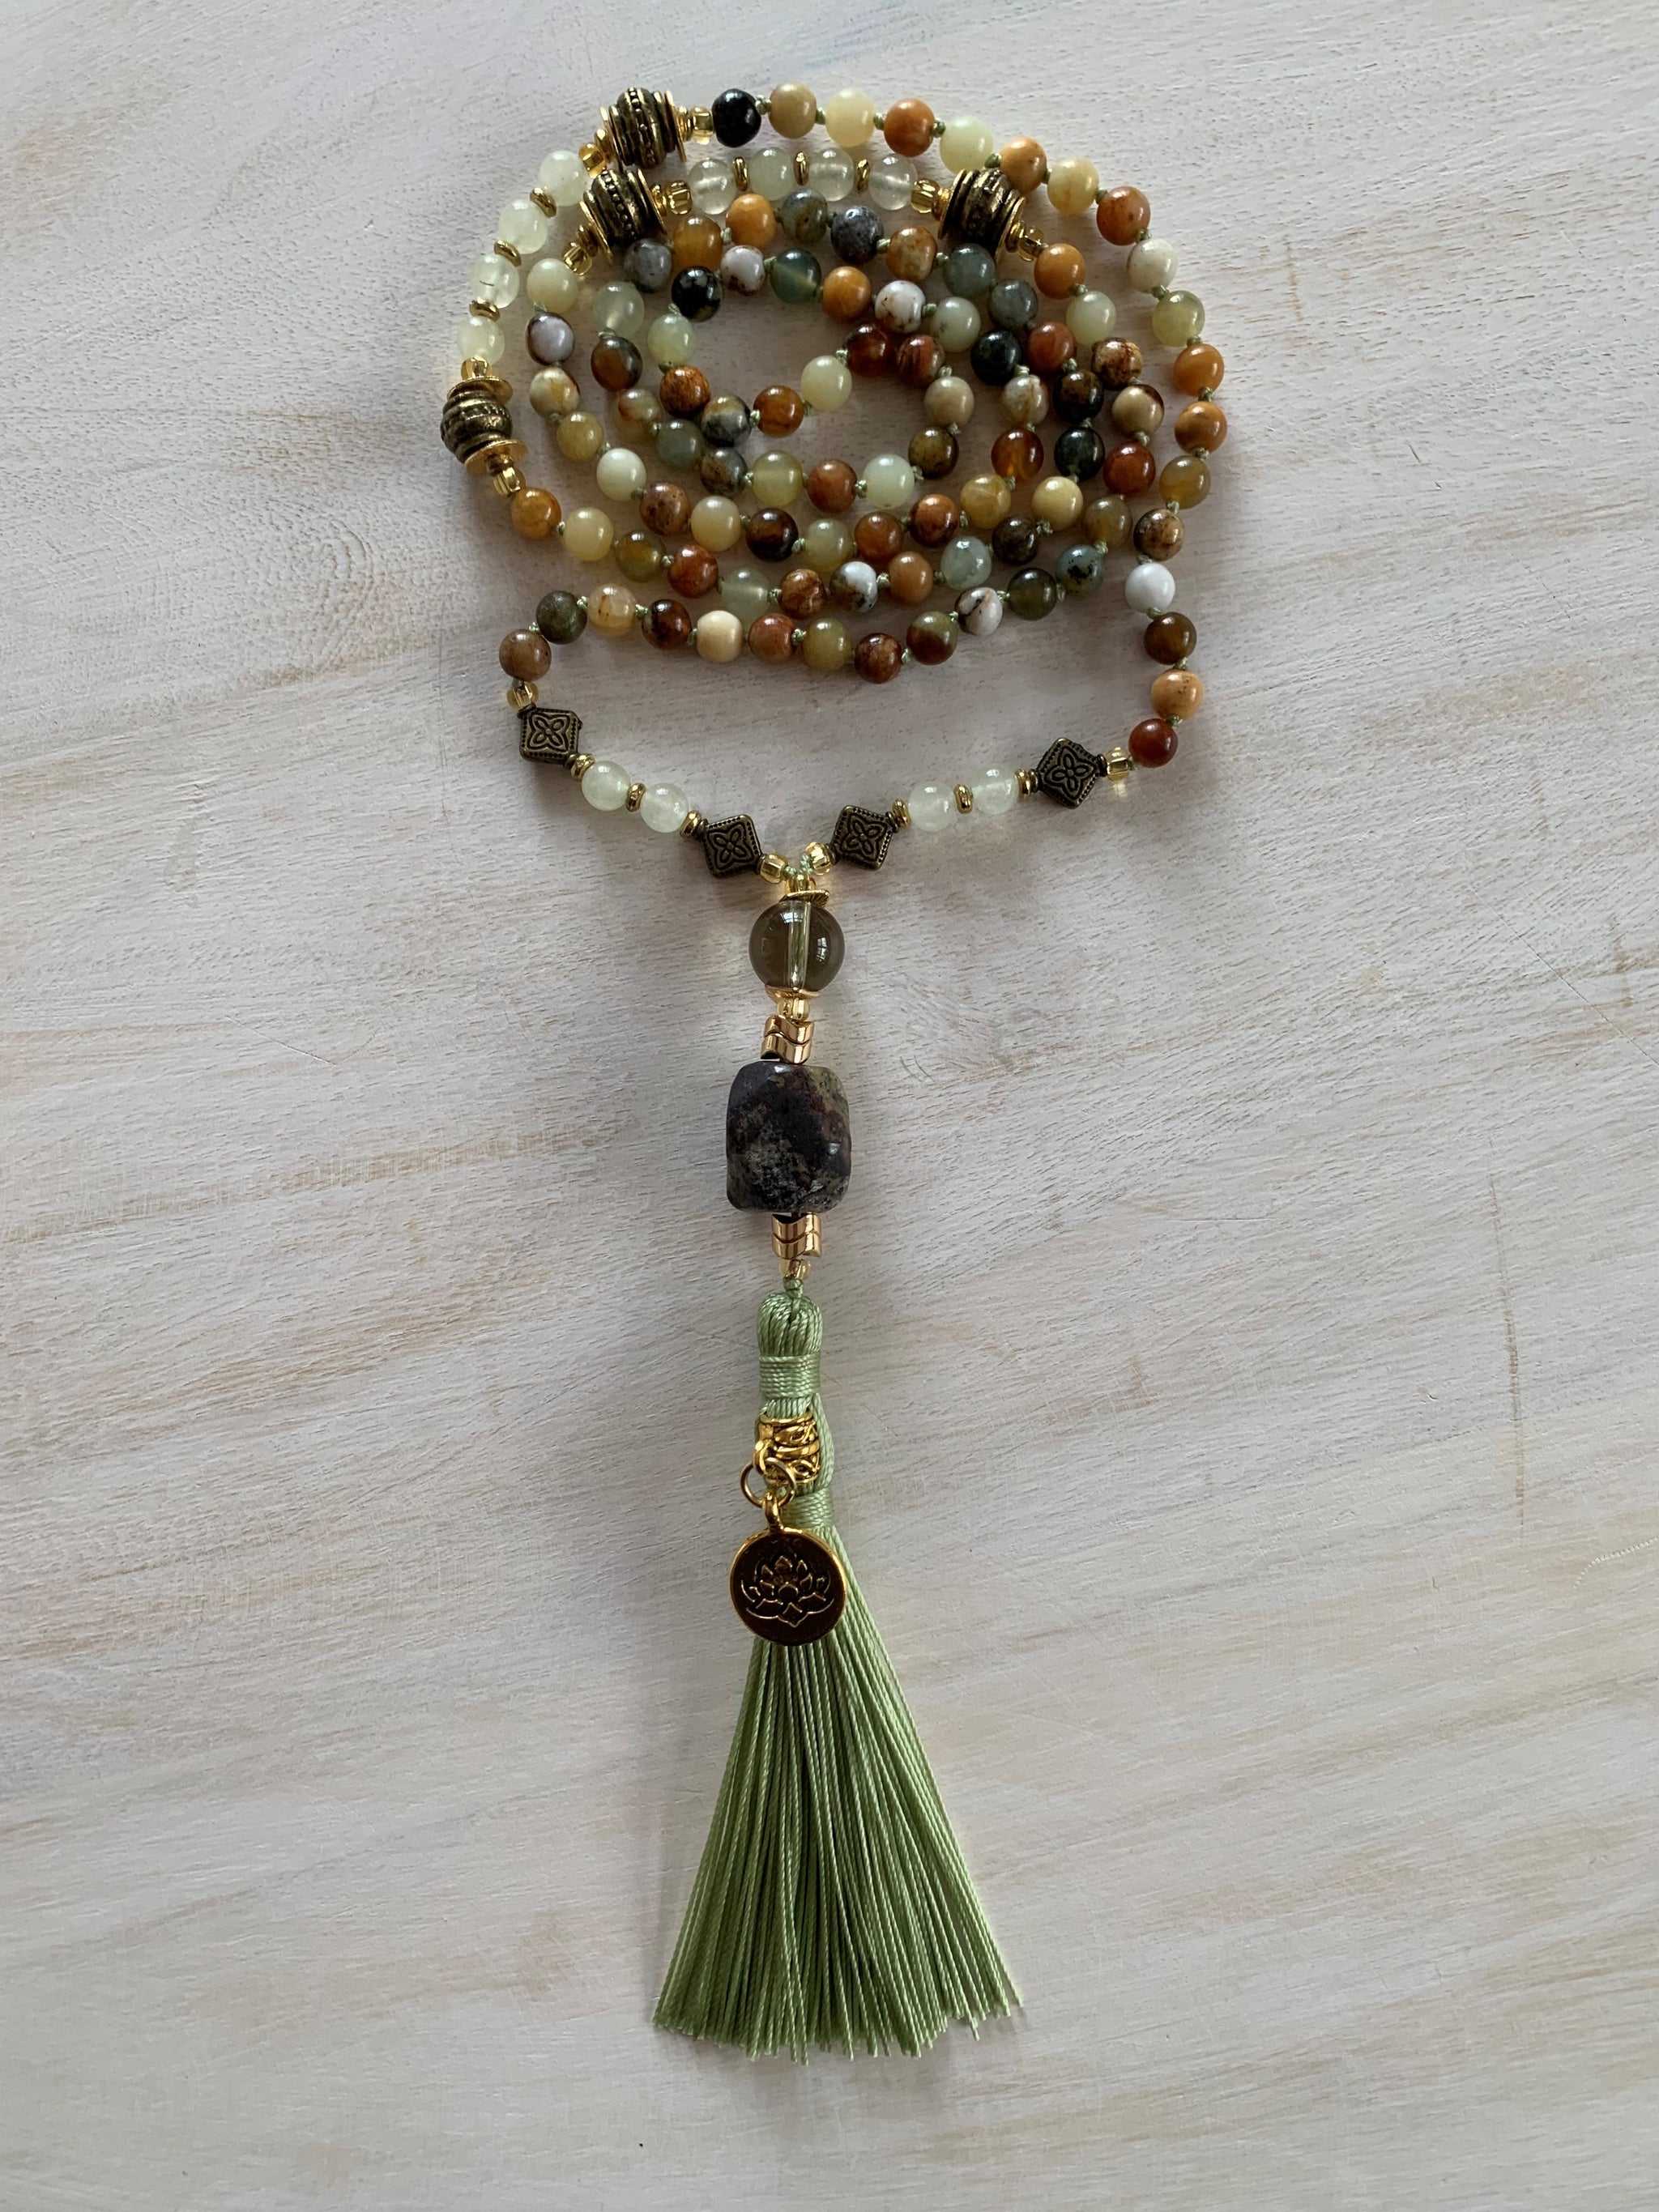  Let It Go 7 Chakras 108 Mala Beads Bracelet Real Healing  Gemstone Yoga Meditation Hand-Knotted Mala Prayer Beads Necklace : Handmade  Products